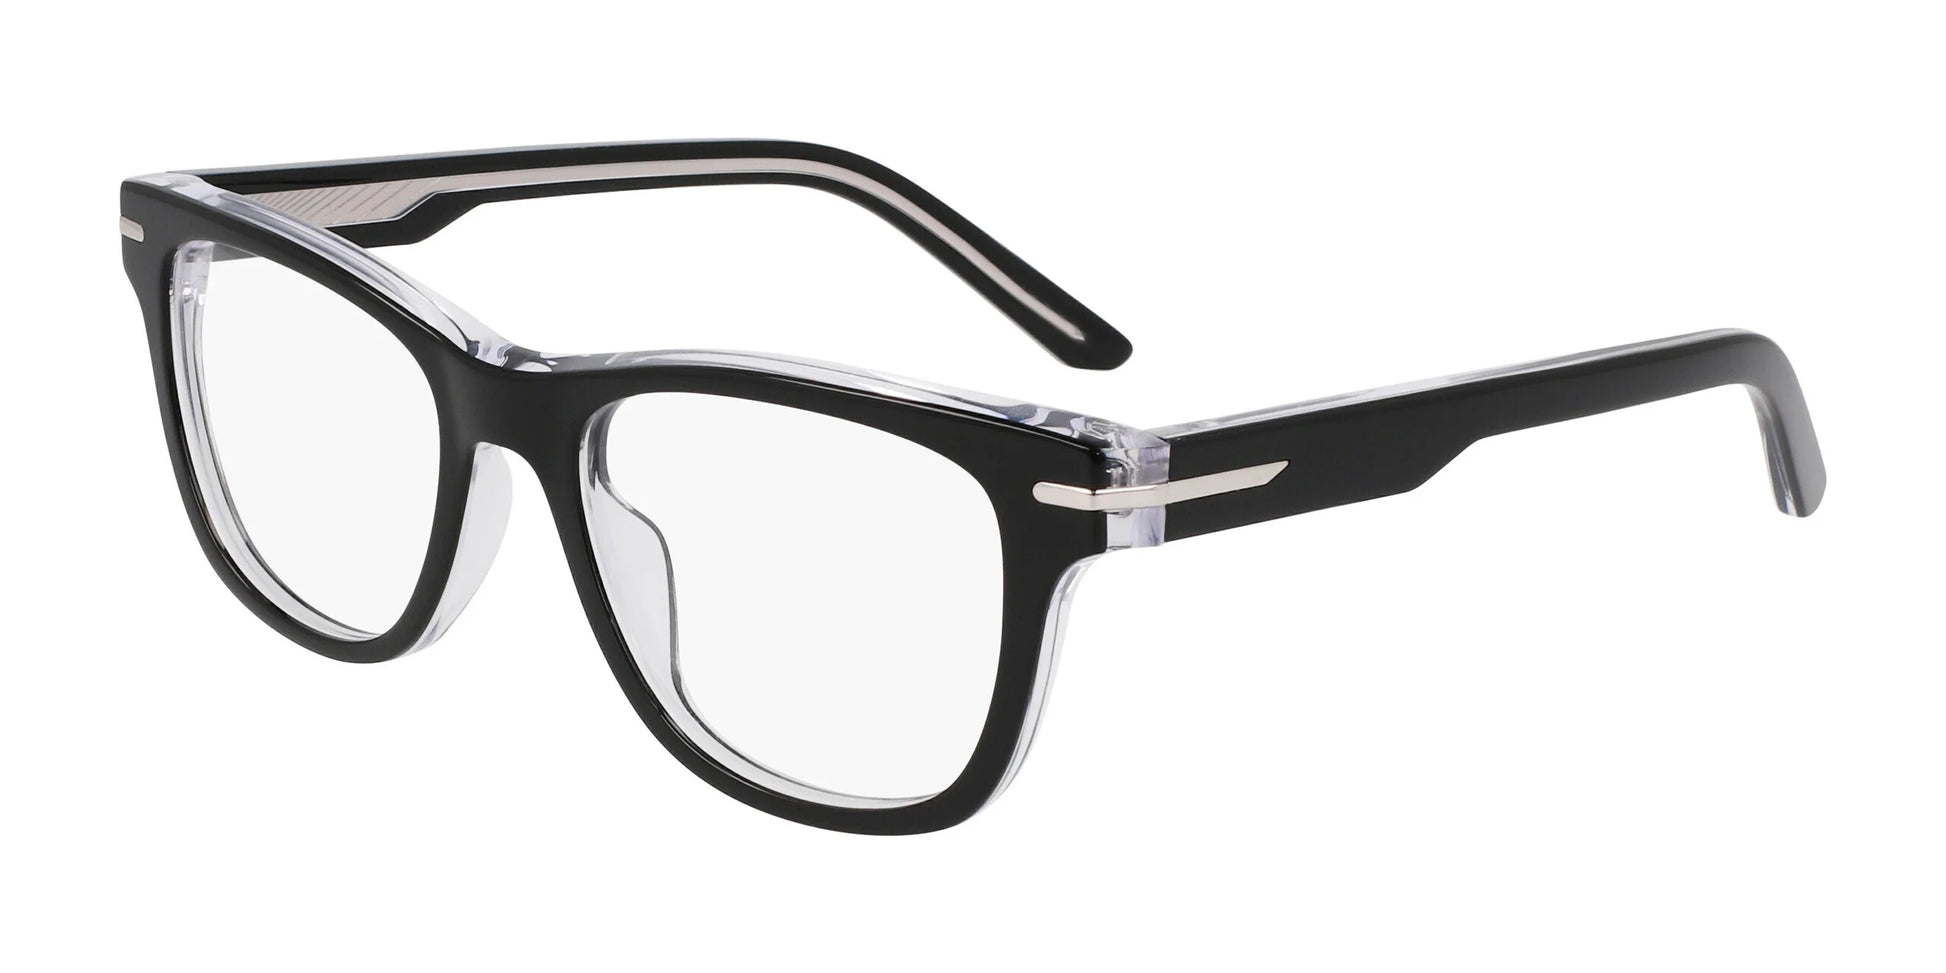 Nike 7176 Eyeglasses Charcoal / Crystal Laminate